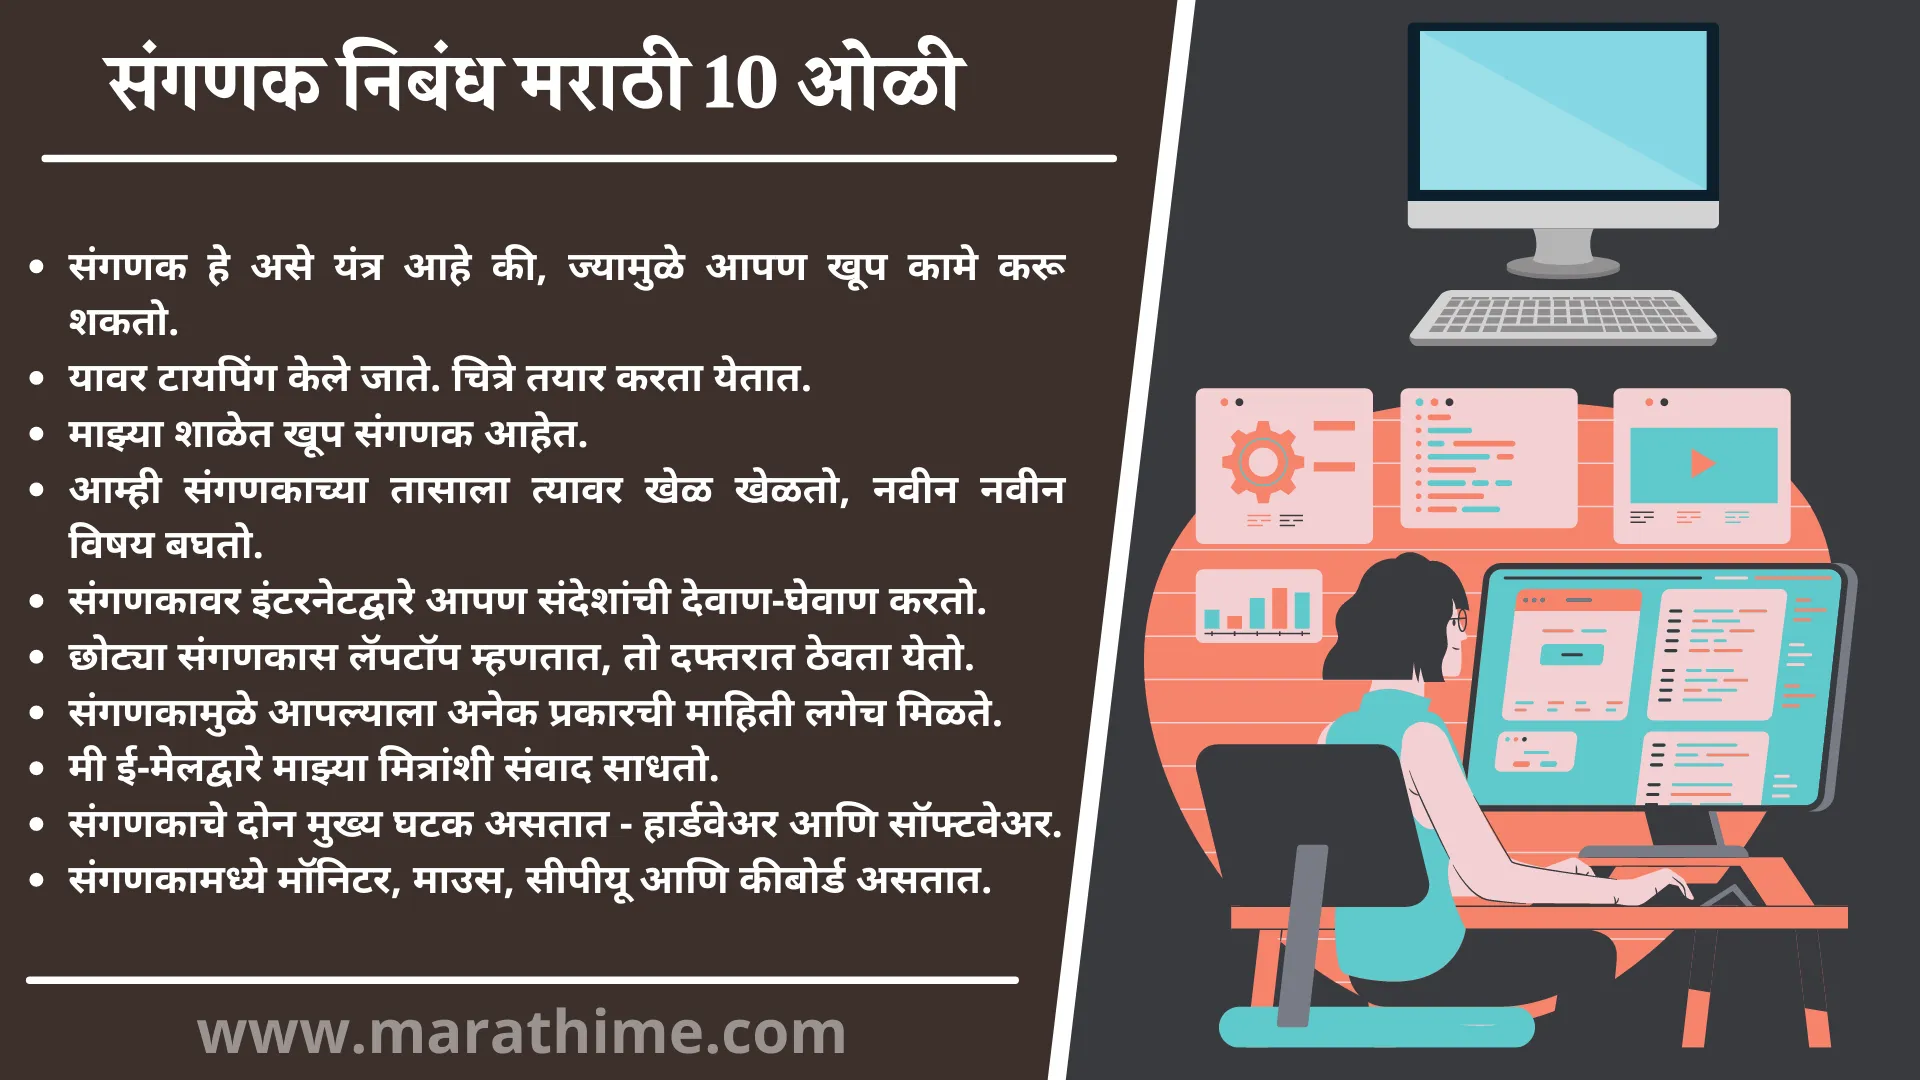 संगणक निबंध मराठी 10 ओळी-10 Lines on Computer in Marathi